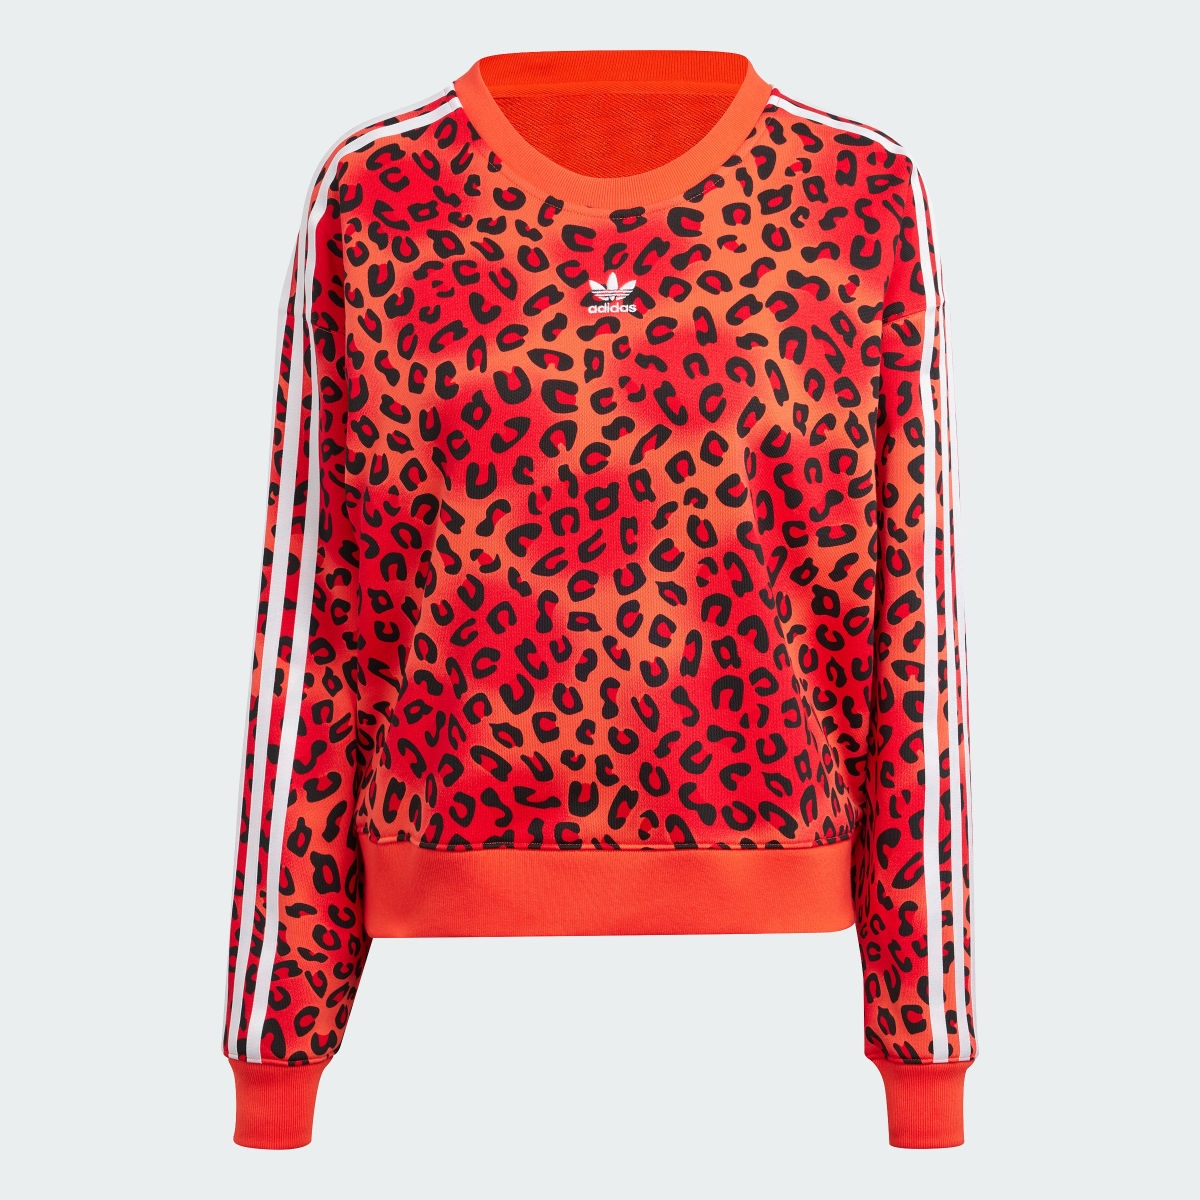 Adidas Sweat-shirt ras-du-cou Trèfle adidas Originals Leopard Luxe. 5